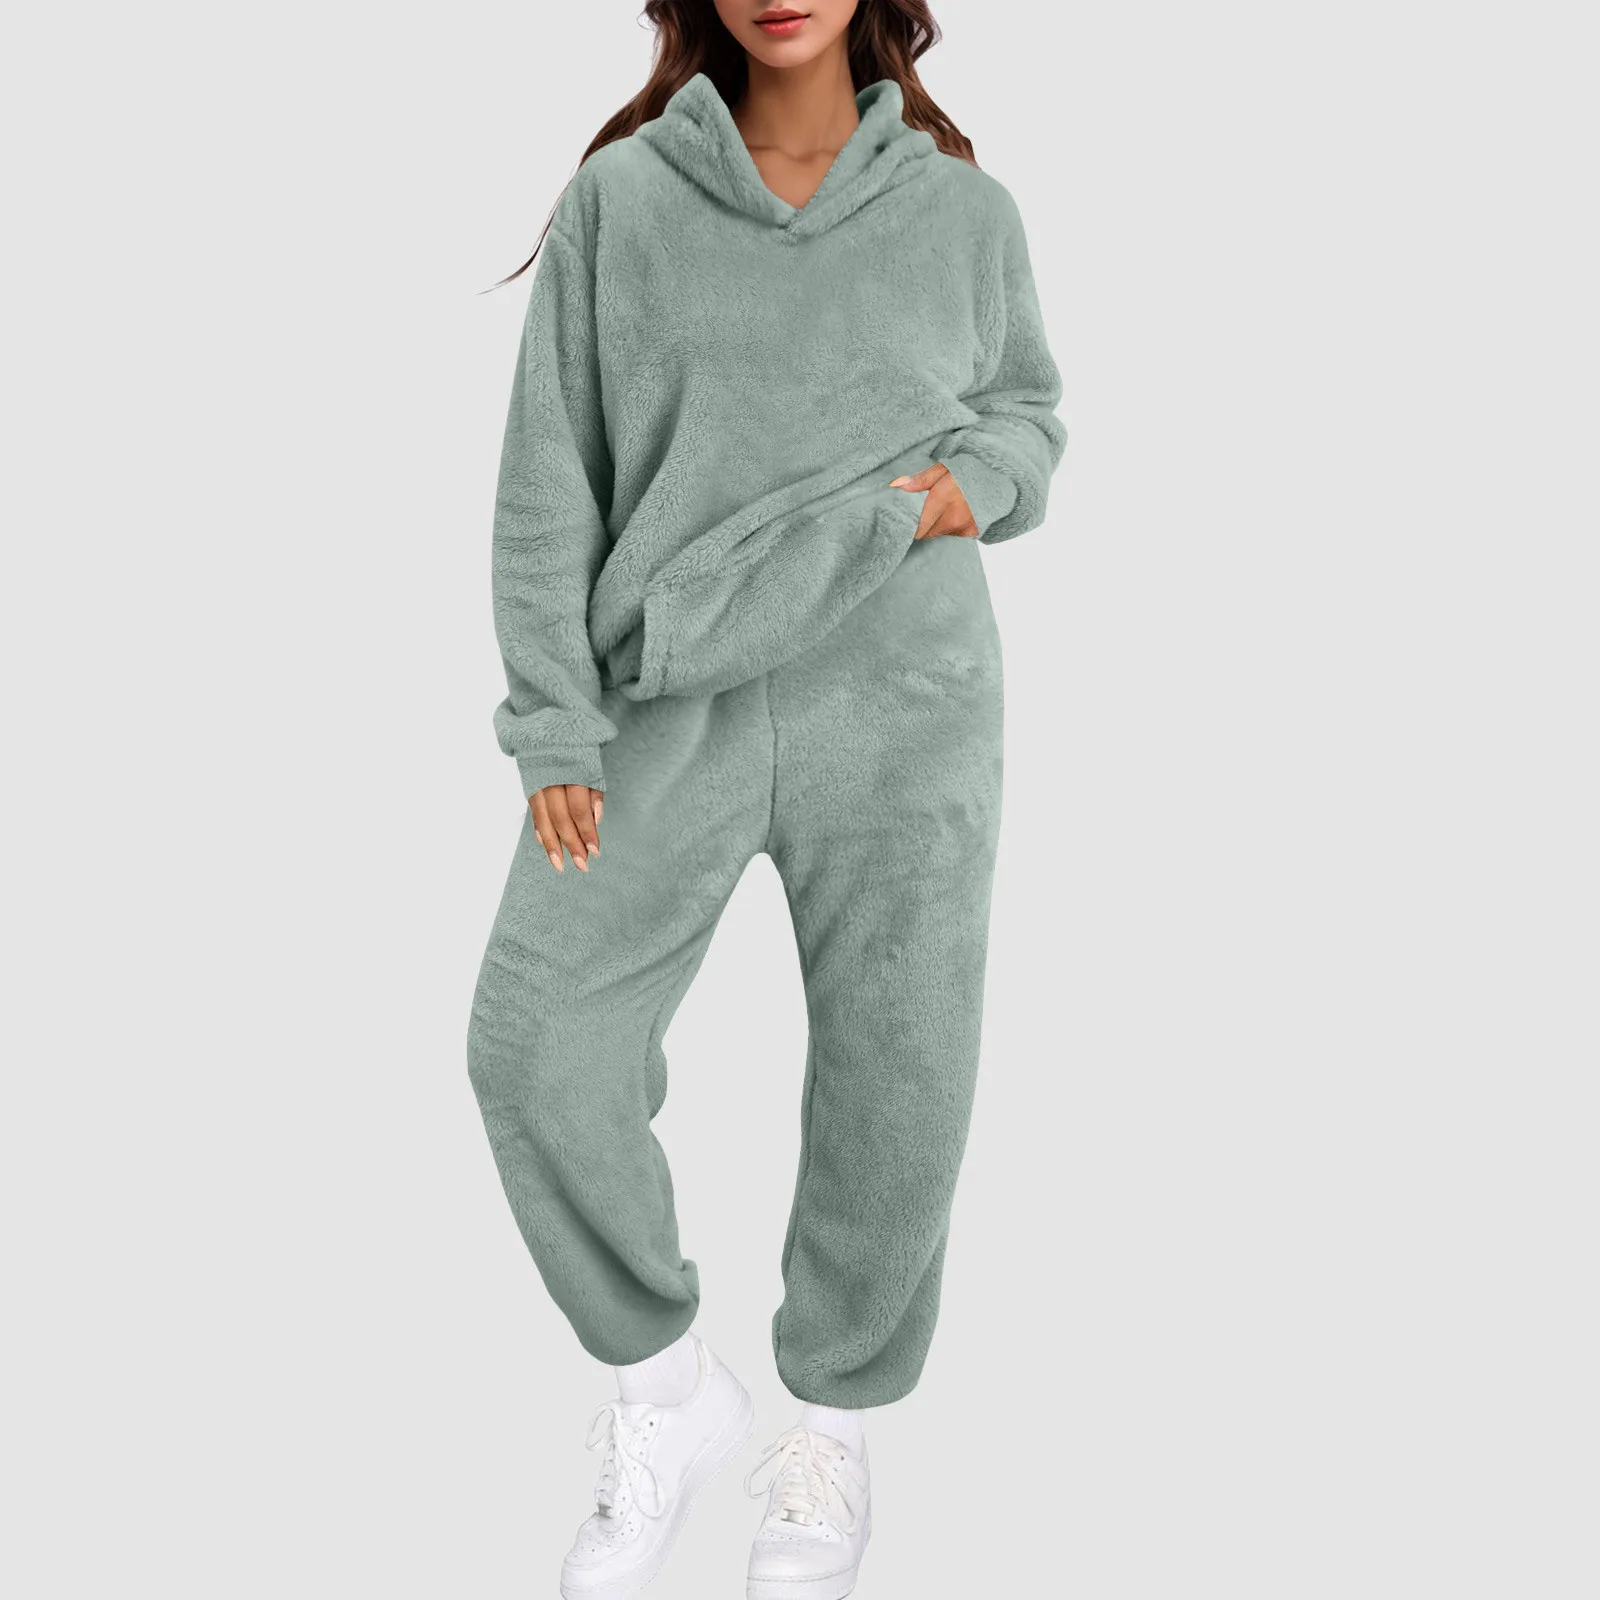 

Womens 2 Piece Outfits Fuzzy Hoodie Sweatsuit Sets Slim Sweatshirt Baggy Fall Fashion Sweatpants Exercise Jogging Matching Set